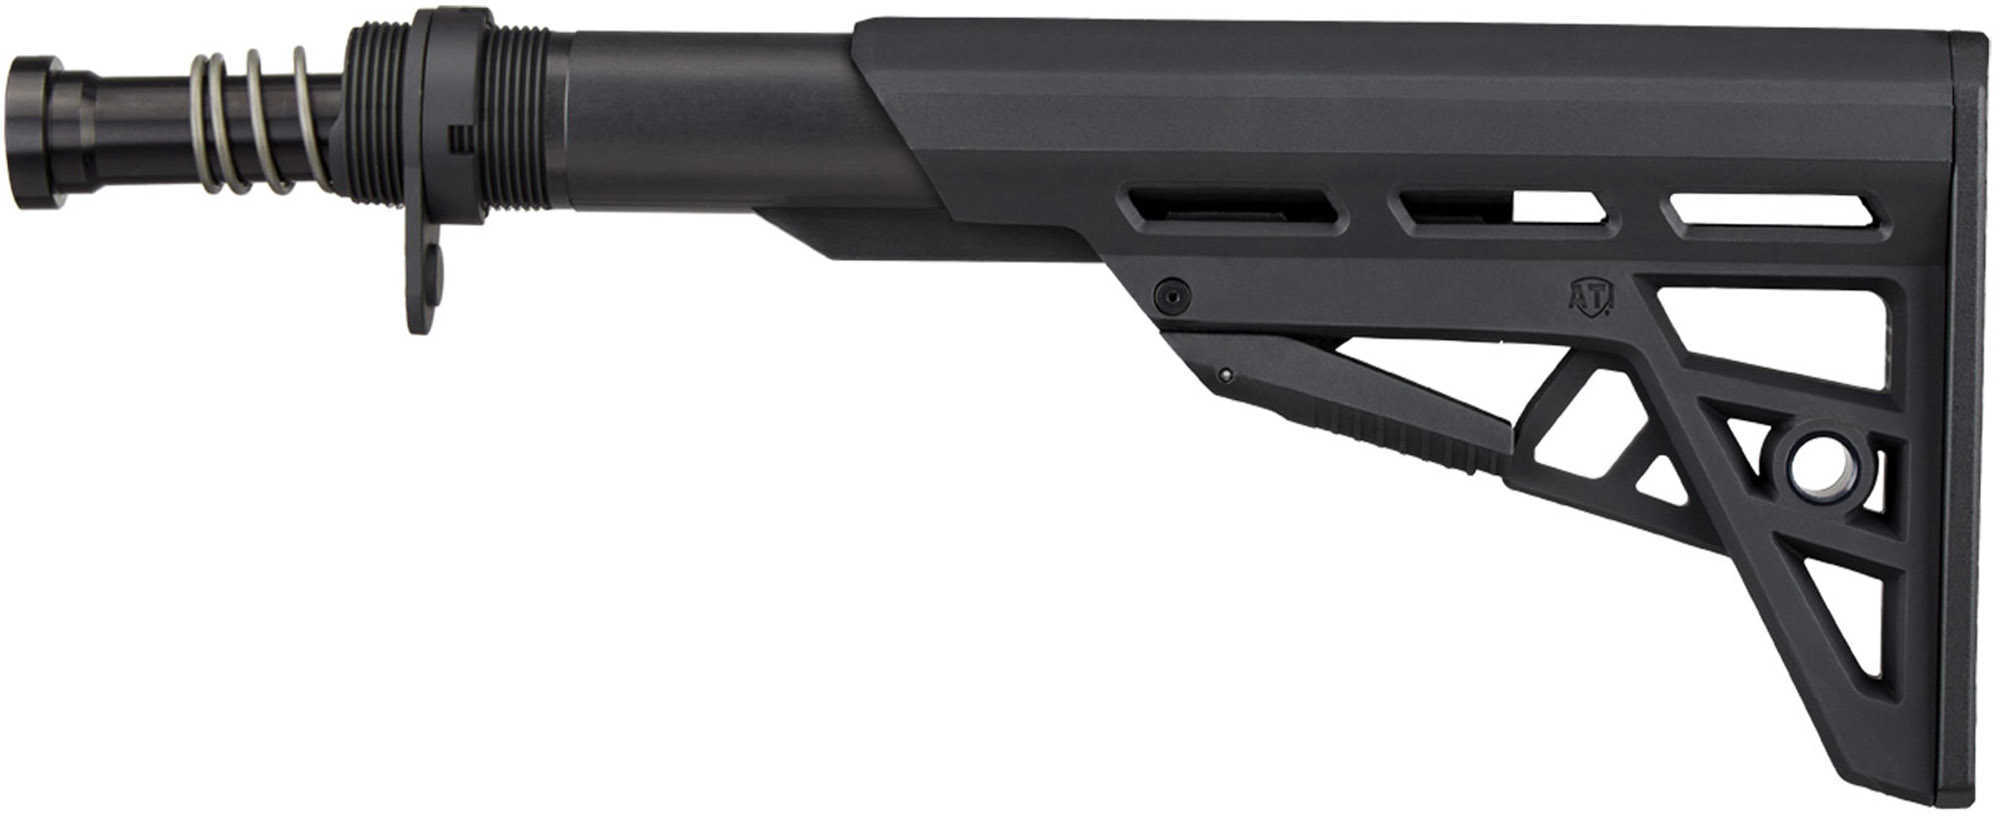 Advanced Technology B2102214 AR-15 TactLite Six Position Buttstock with Buffer Tube Assembly Rifle Polymer Black Hardcoa